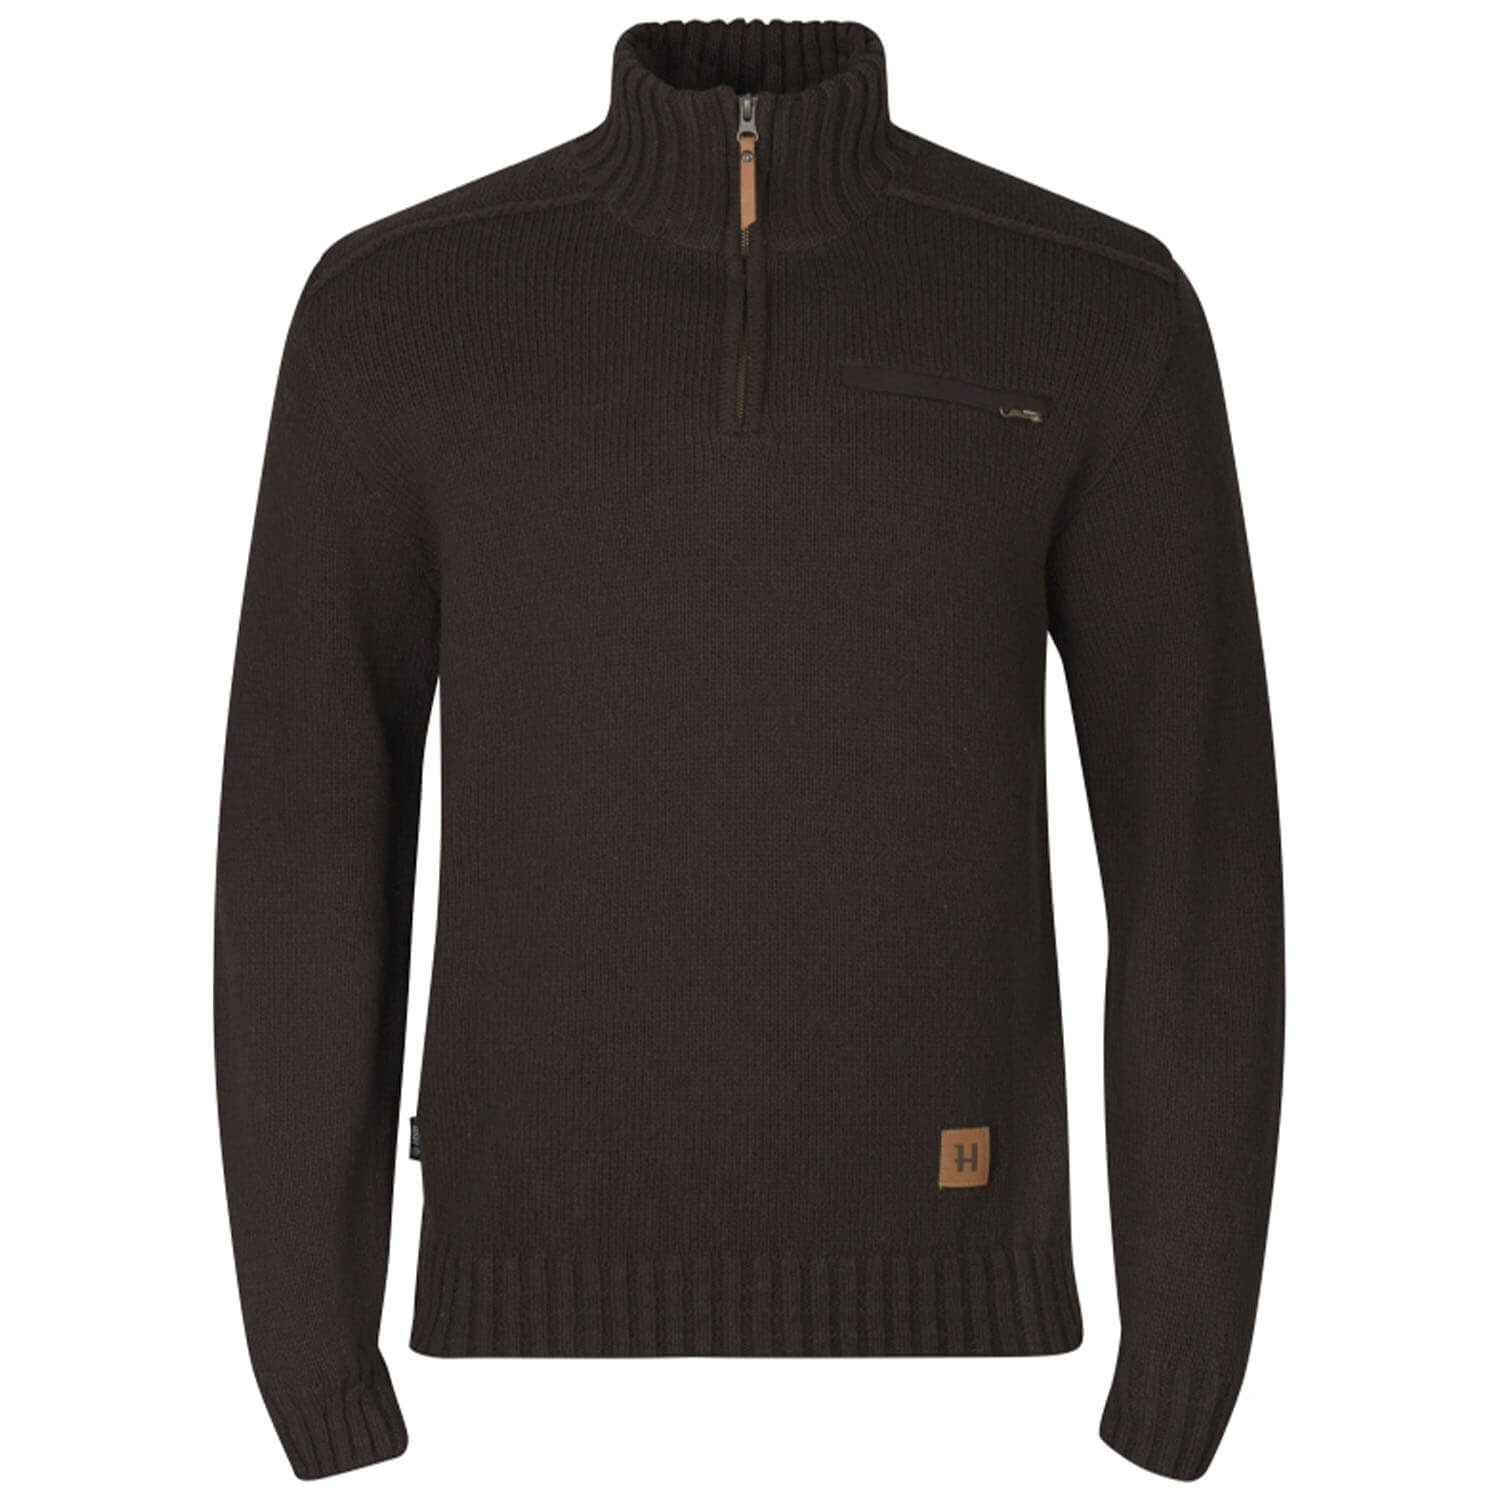 Härkila sweater annaboda 2.0 HSP (demitasse brown) - Sweaters & Jerseys